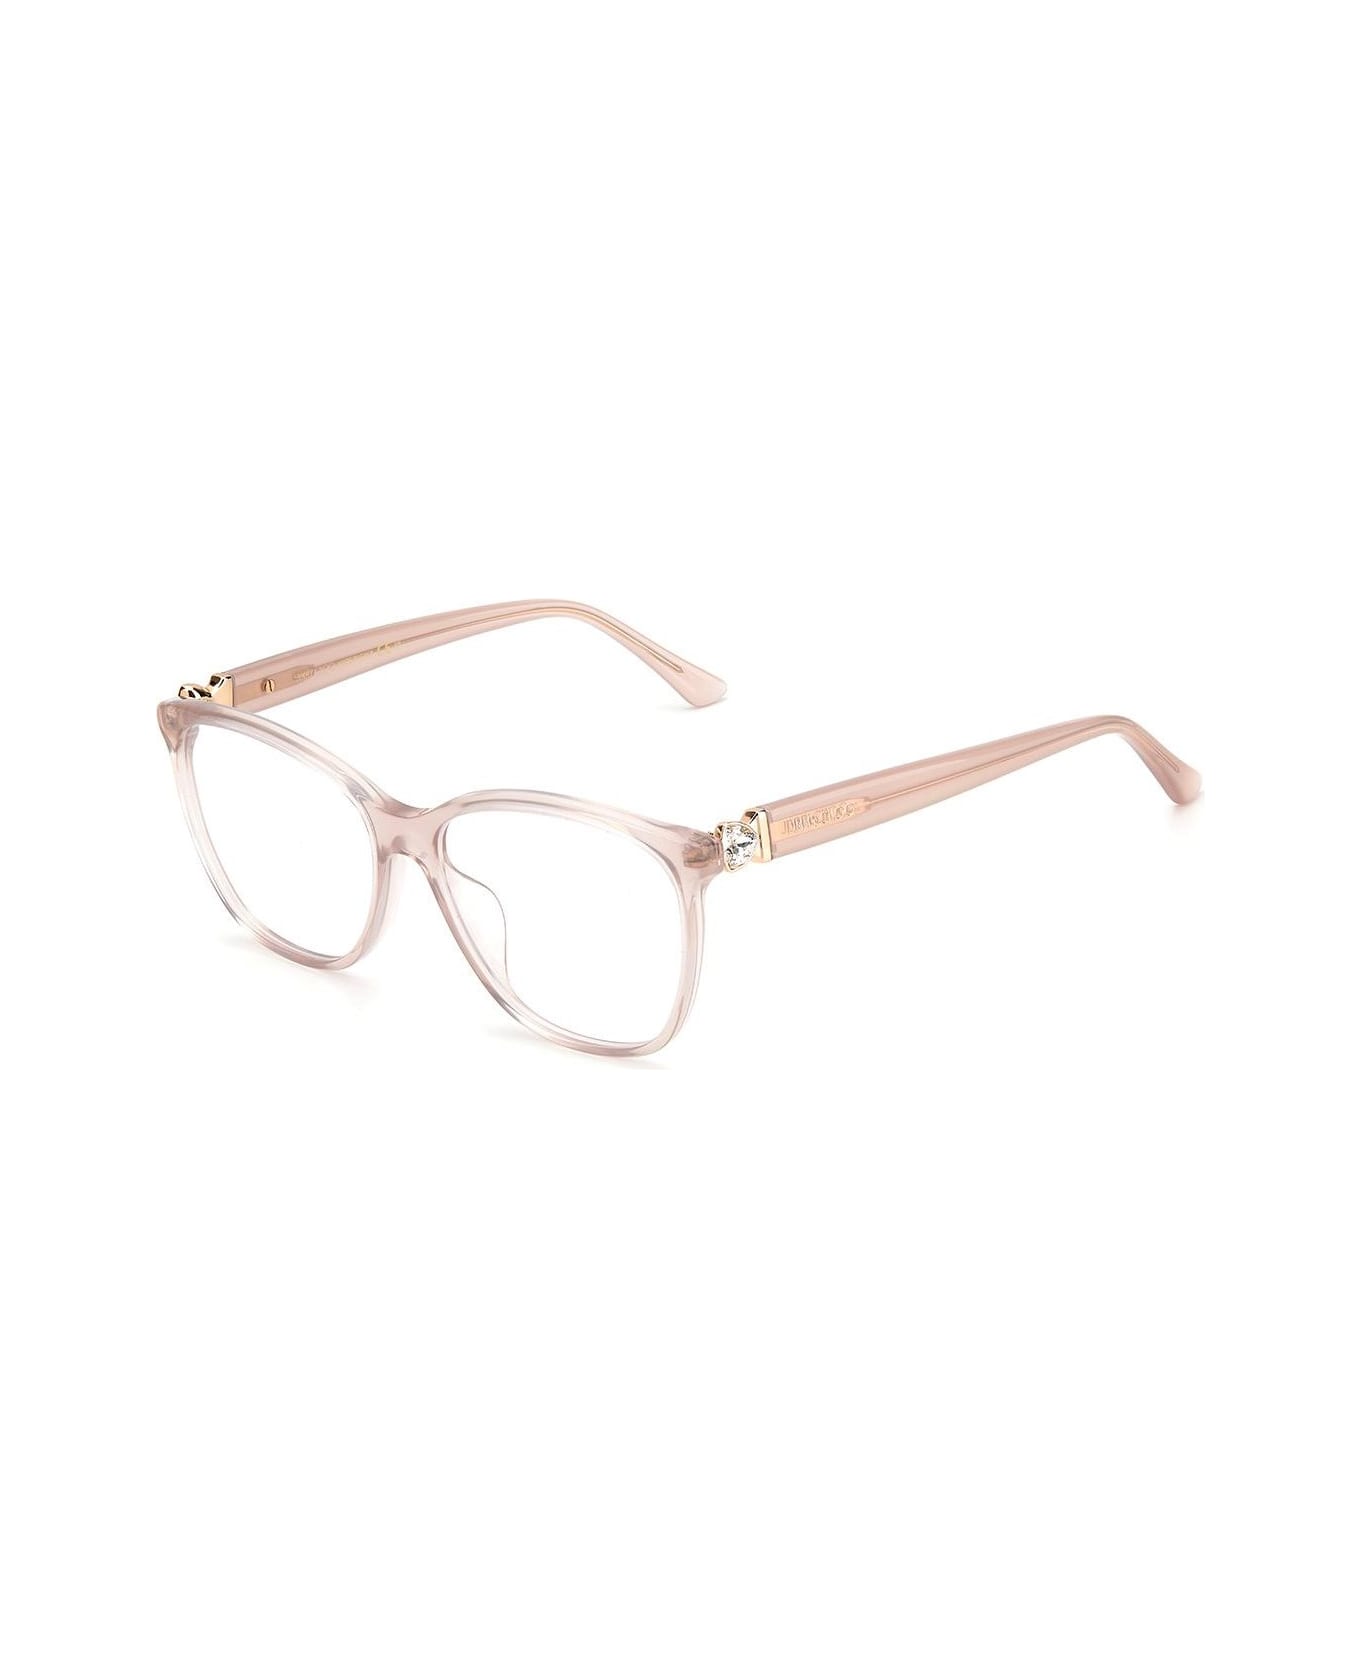 Jimmy Choo Eyewear Jc318/g Glasses - Rosa